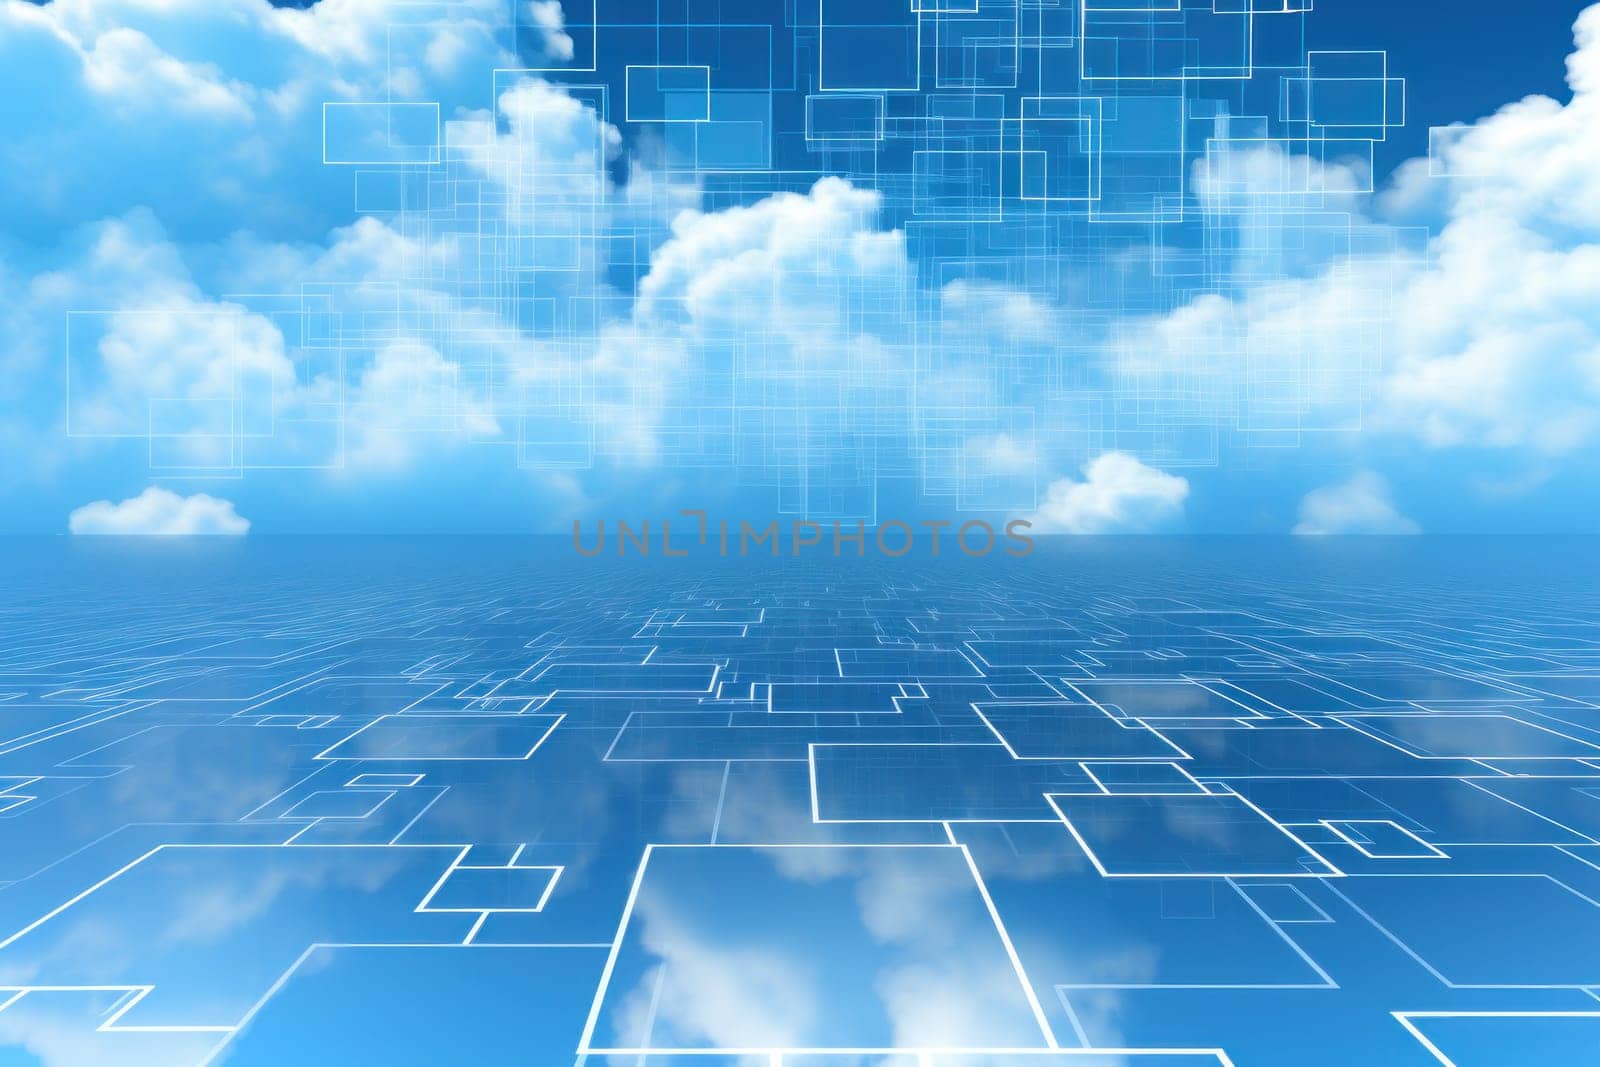 Digital matrix theme light blue sky and clouds backgrounds.